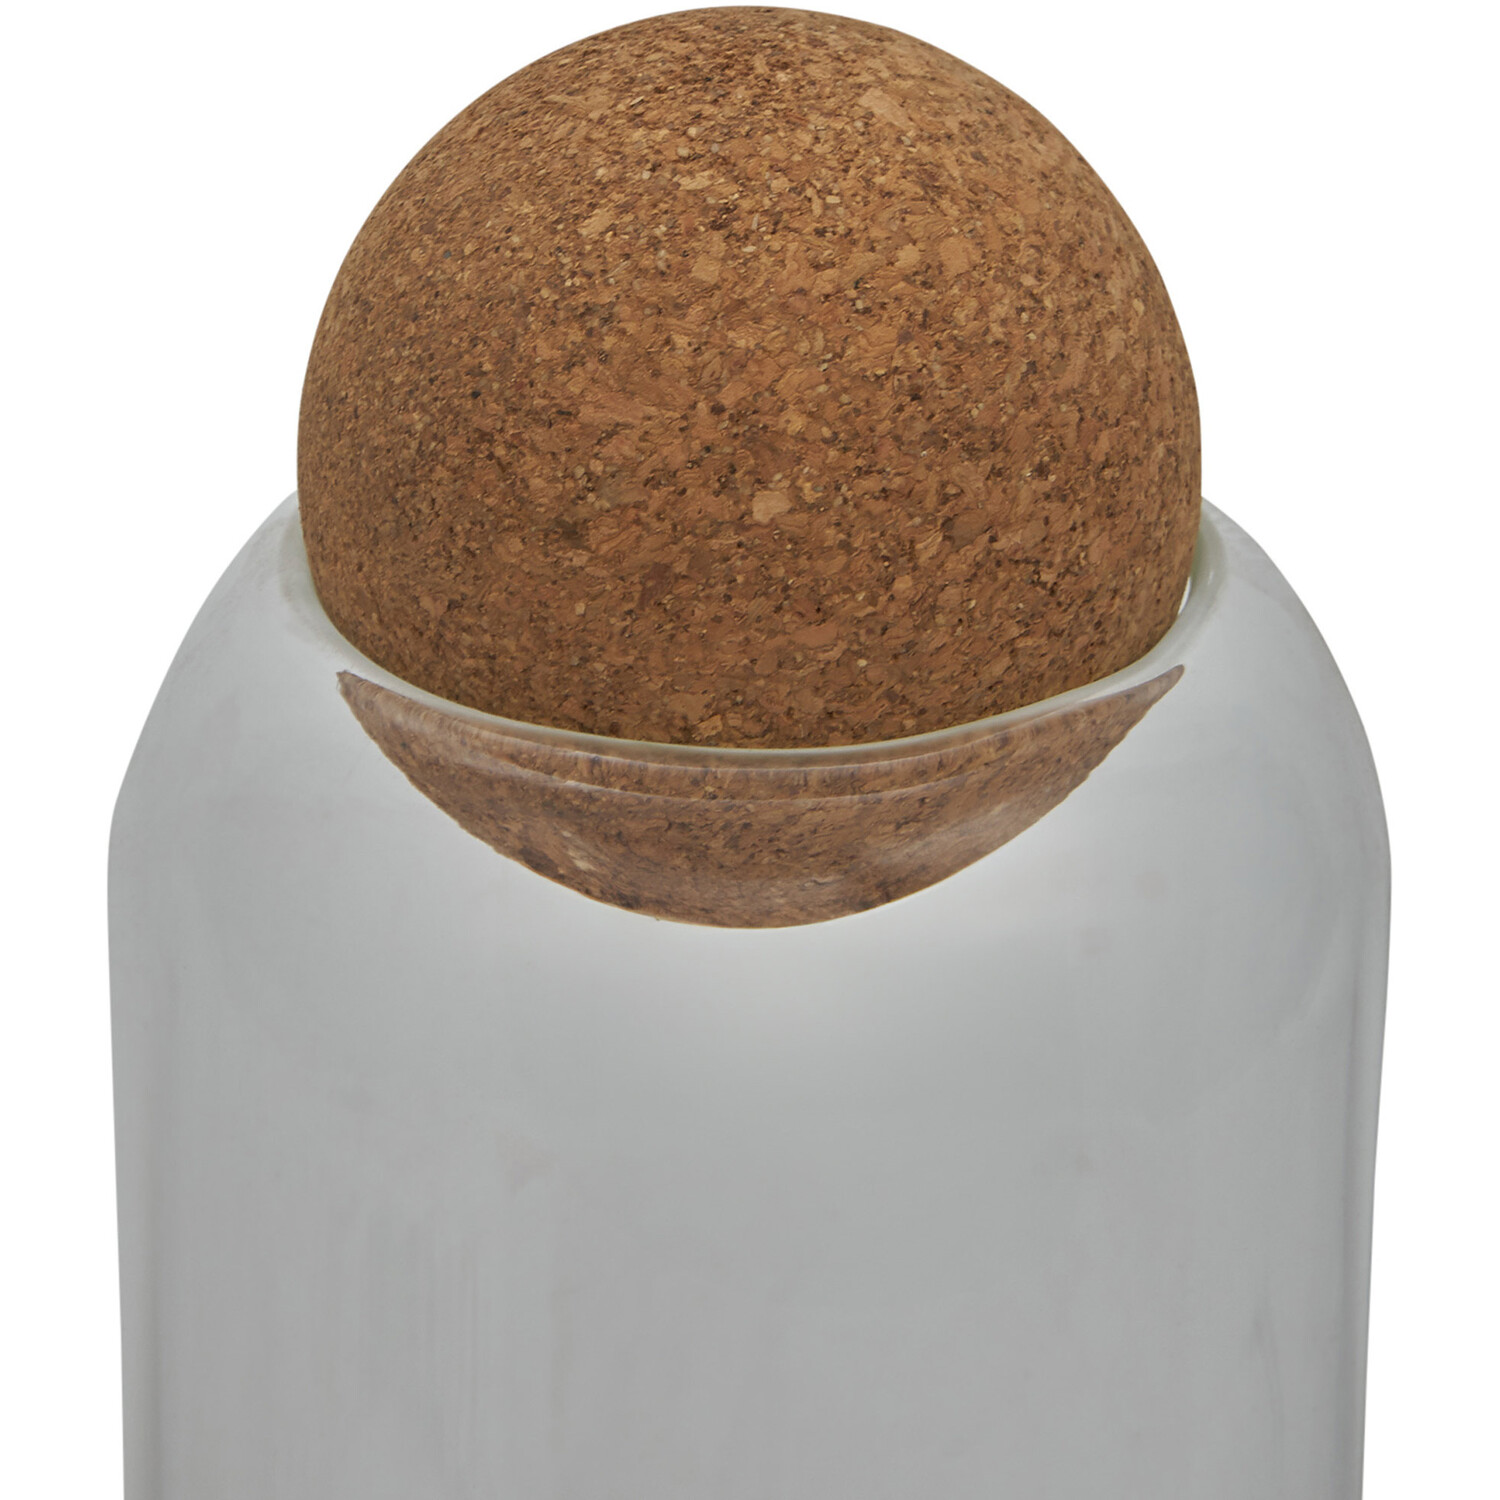 Storage Jar with Cork Lid - Clear / 1.3l Image 2